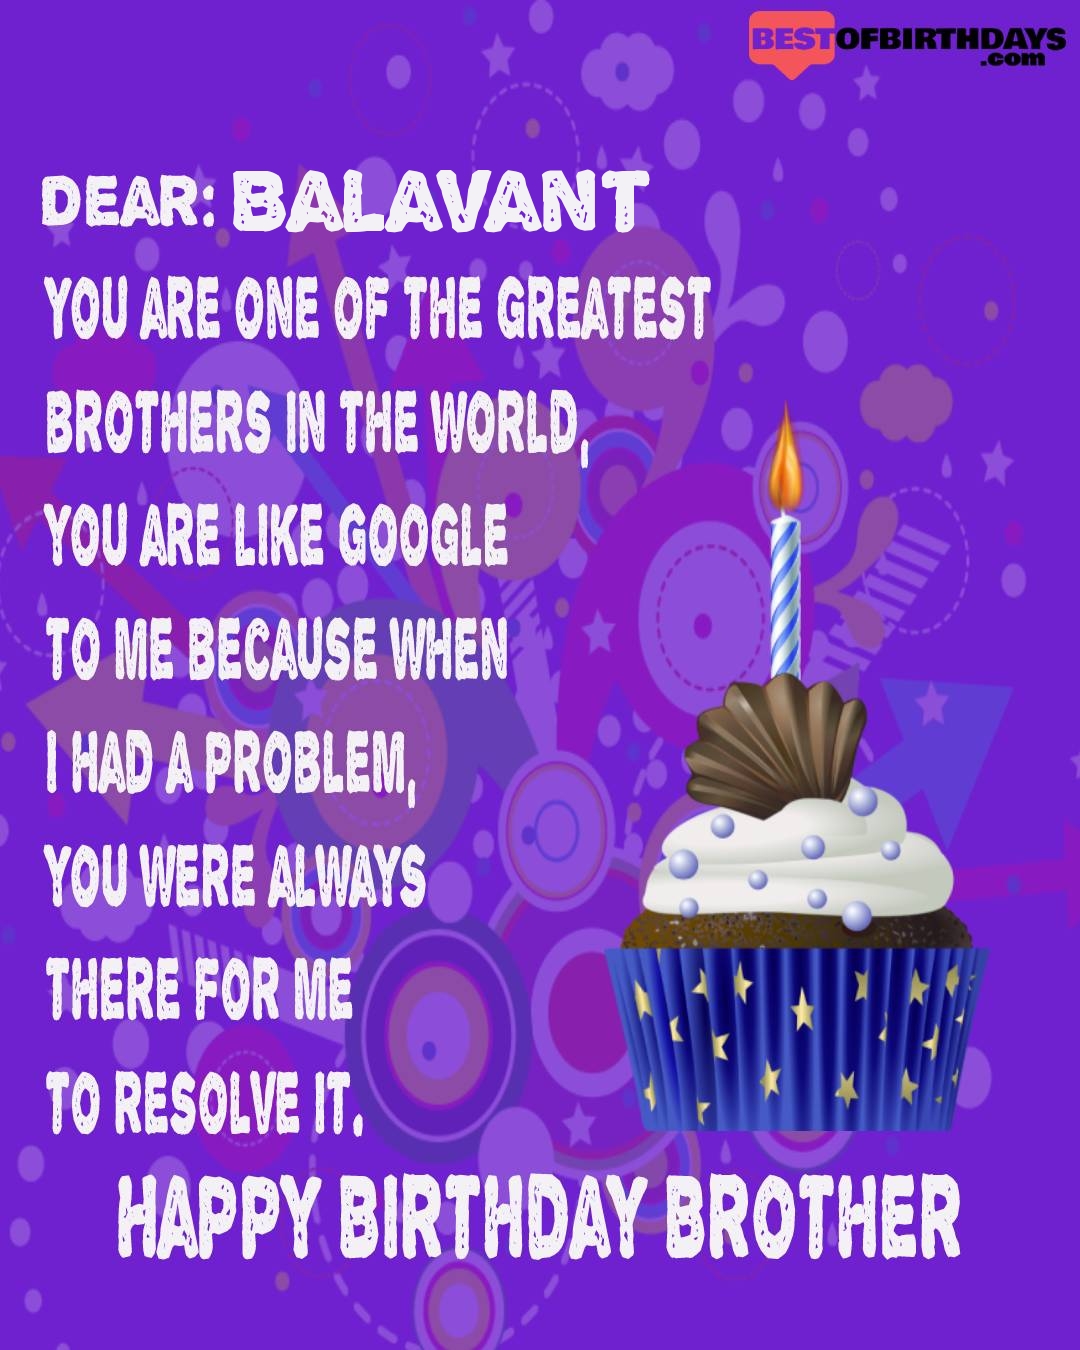 Happy birthday balavant bhai brother bro